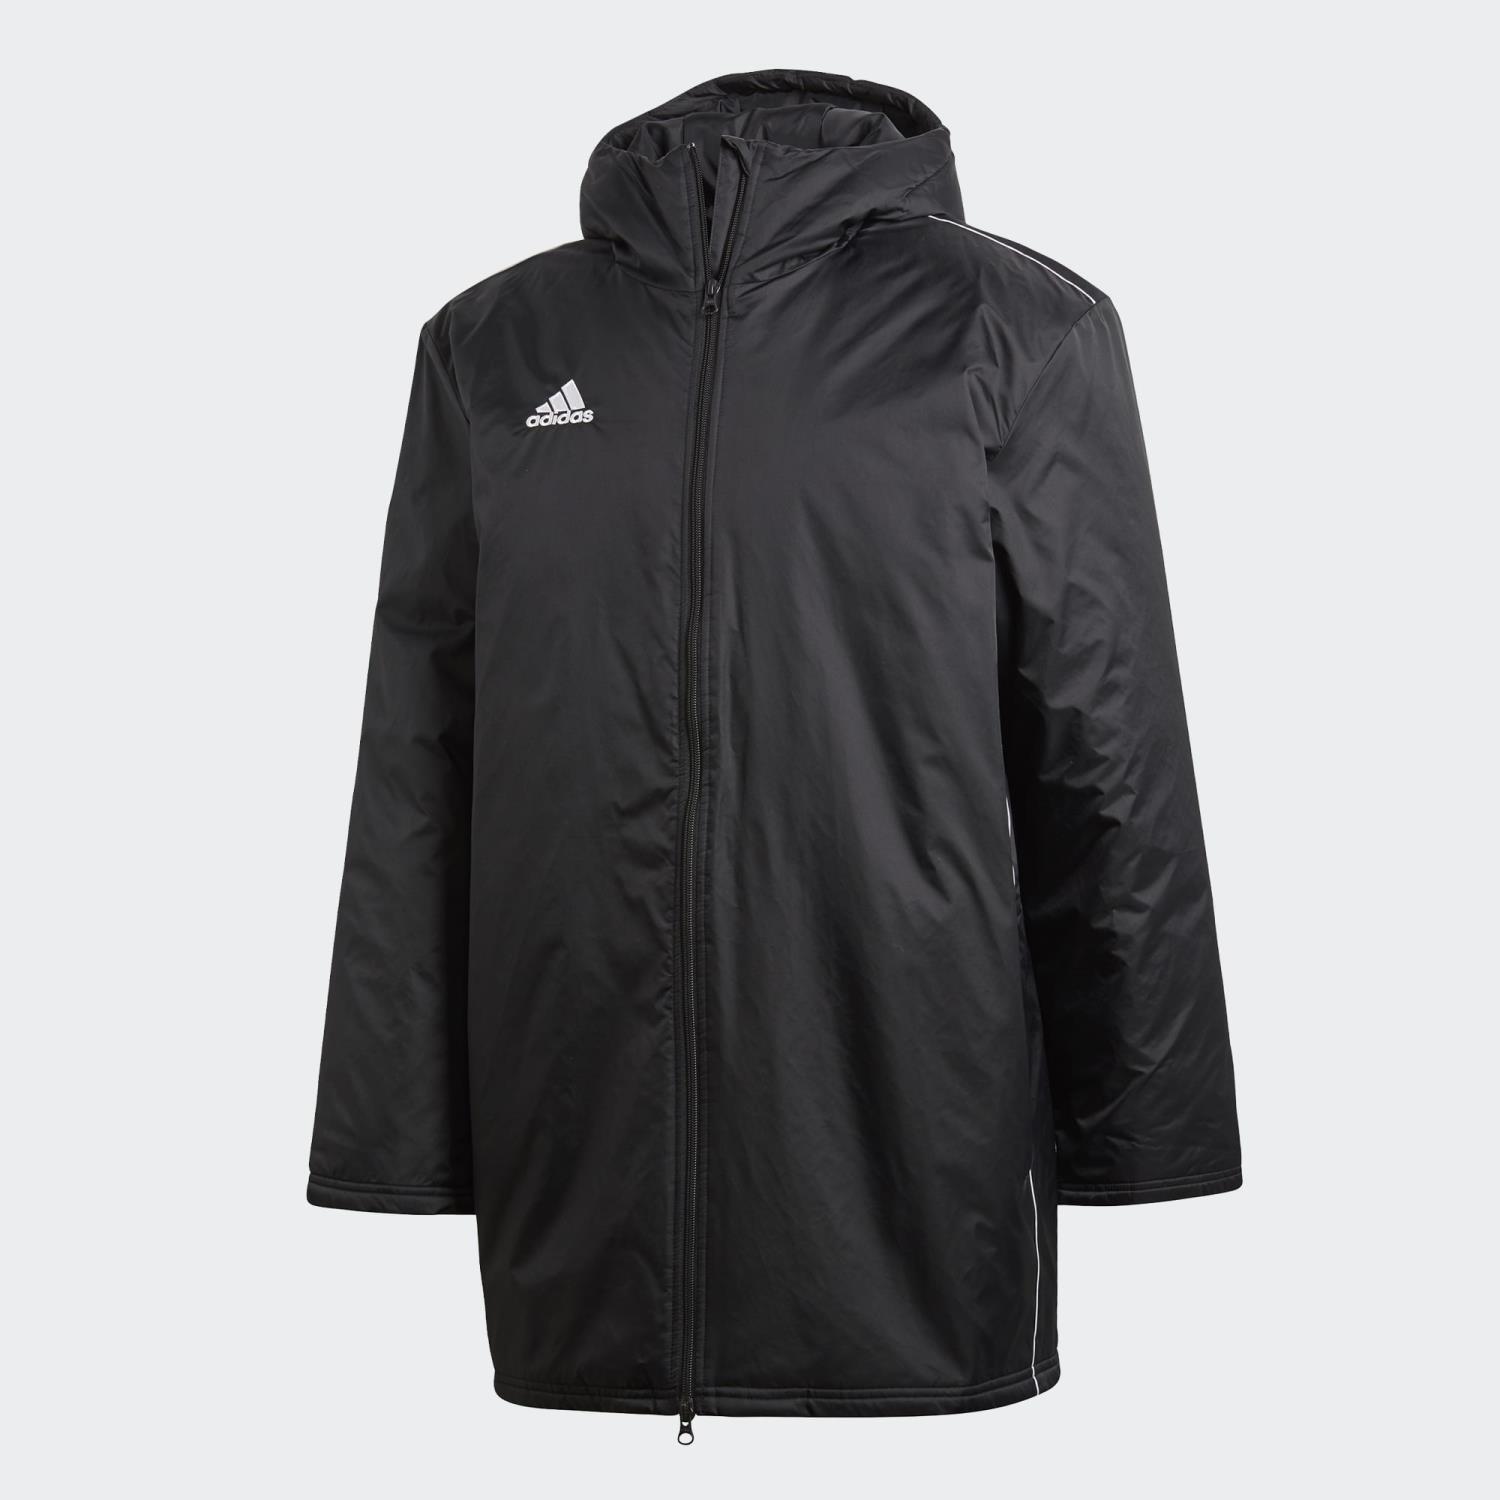 Core 18 standard jacket